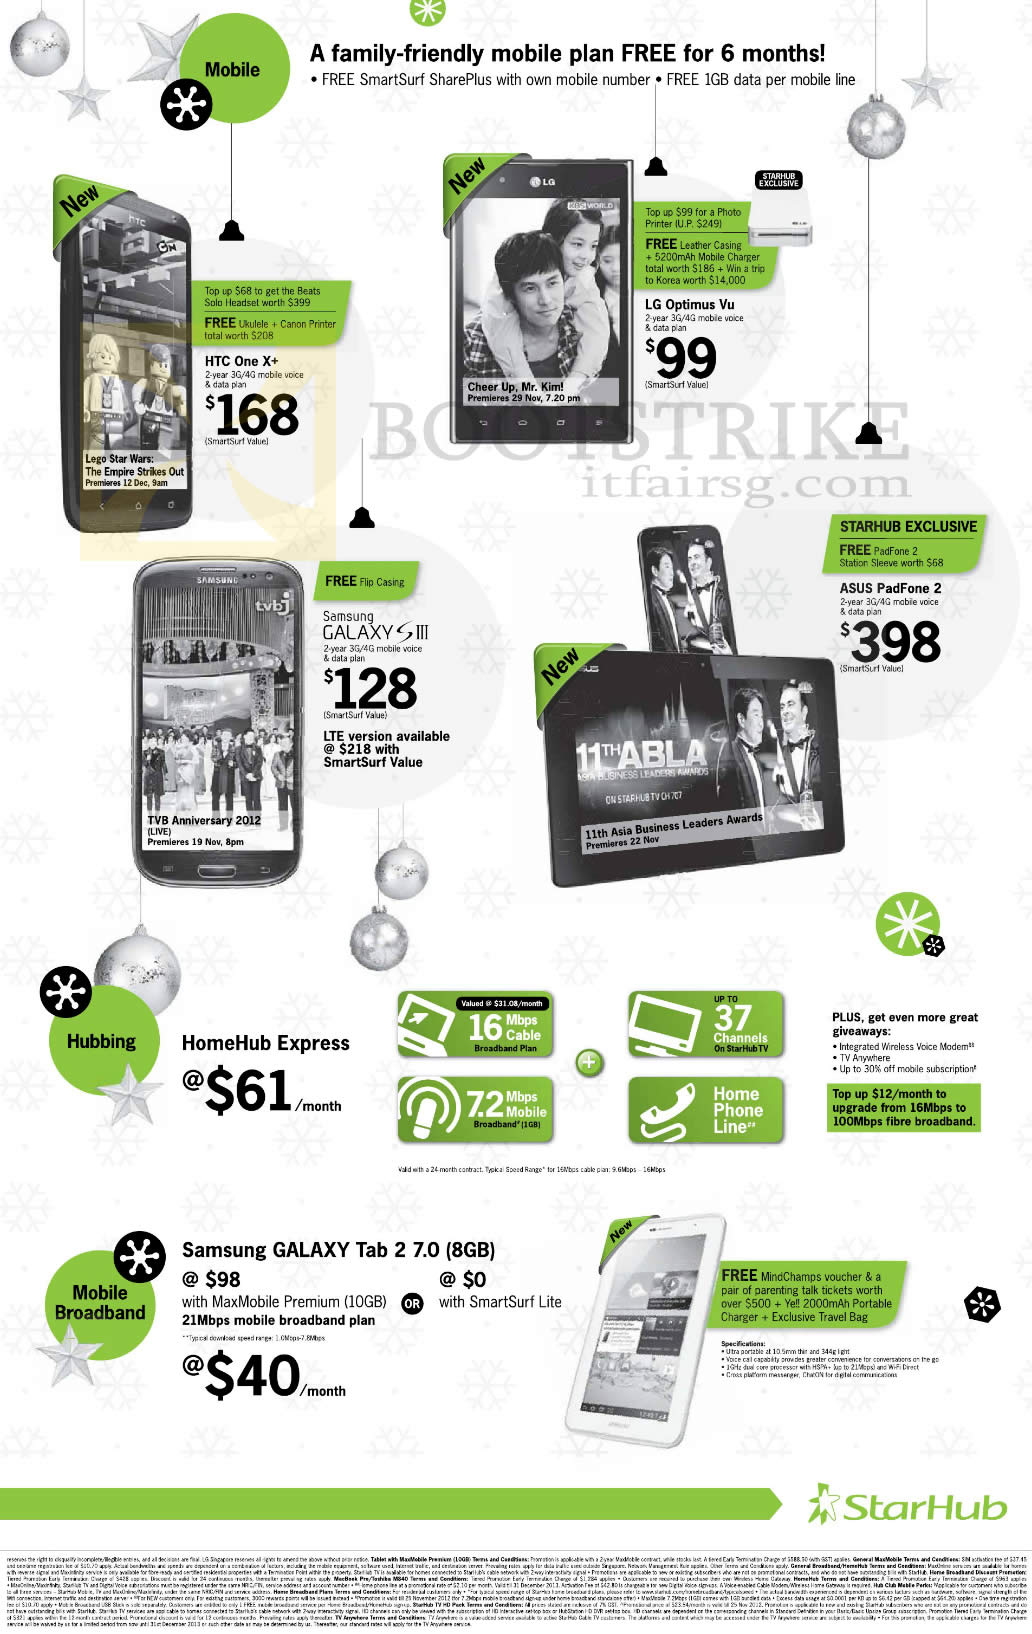 SITEX 2012 price list image brochure of Starhub Mobile Phones HTC One X Plus, LG Optimus Vu, Samsung Galaxy S III, Tab 2 7.0, ASUS PadFone 2, HomeHub Express